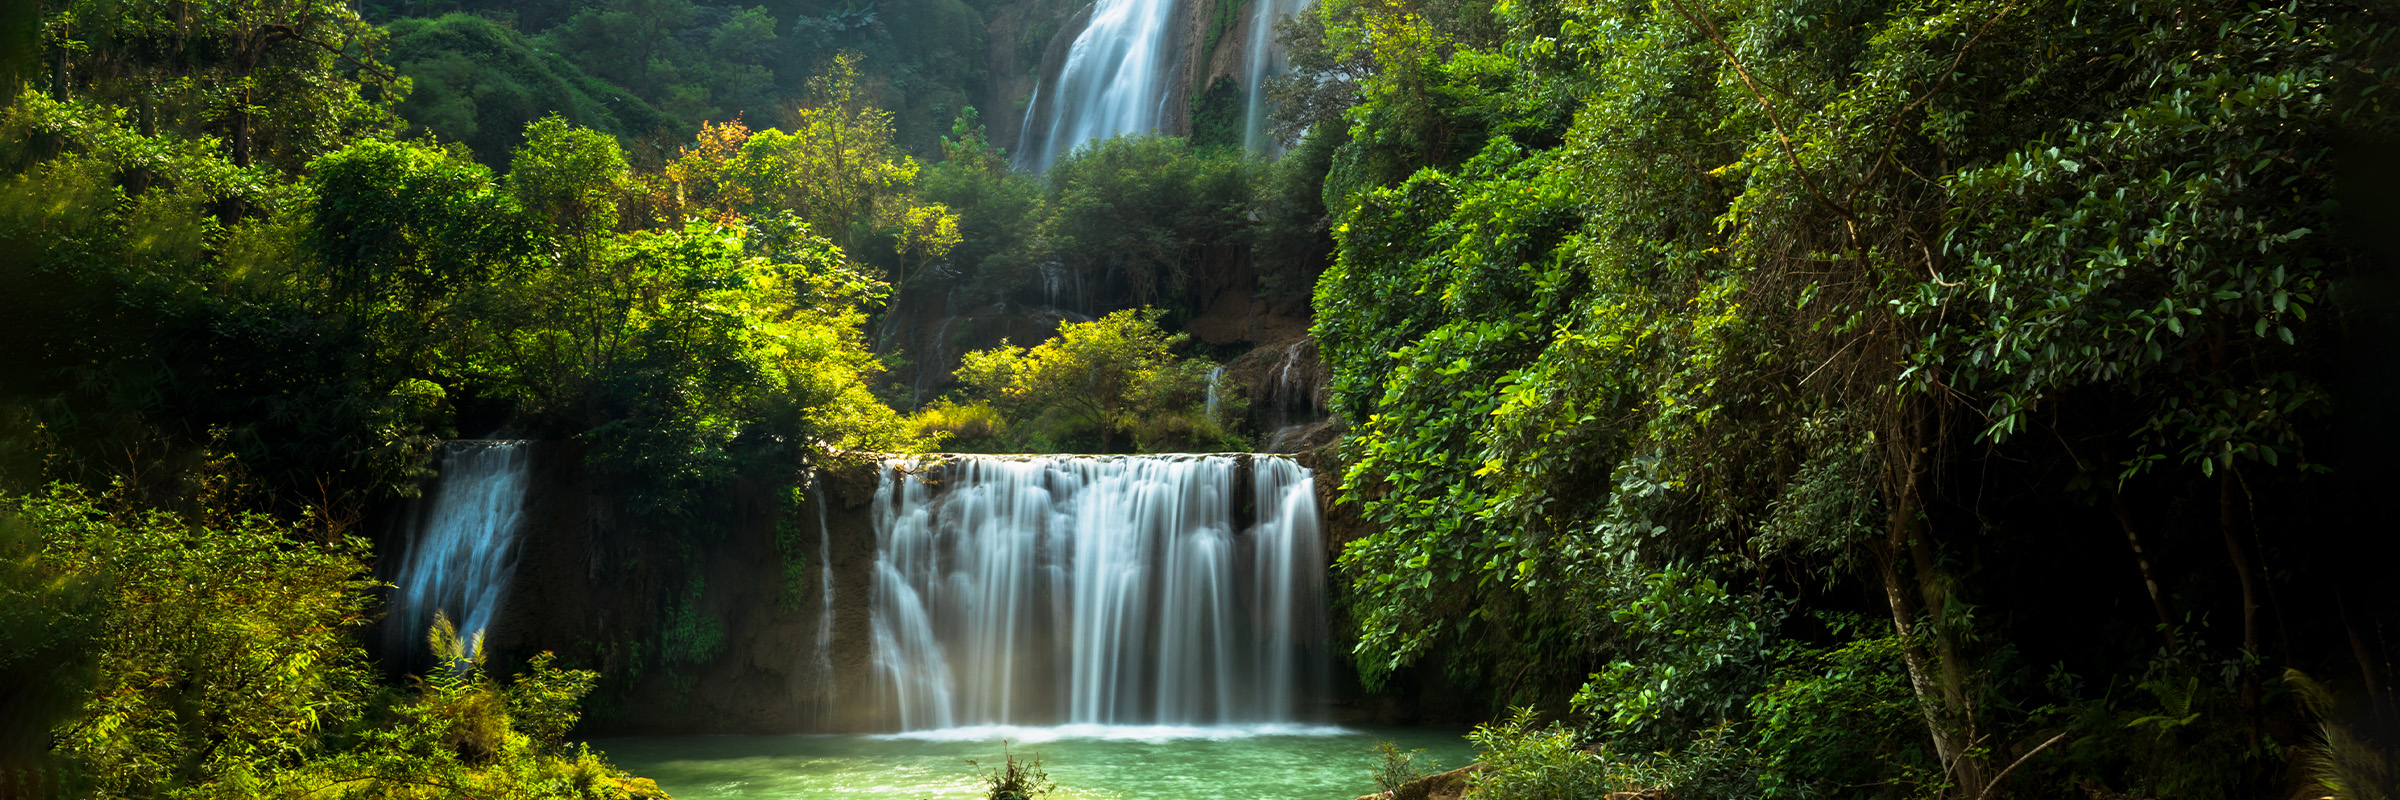 Tee Lor Zu waterfall in summer.